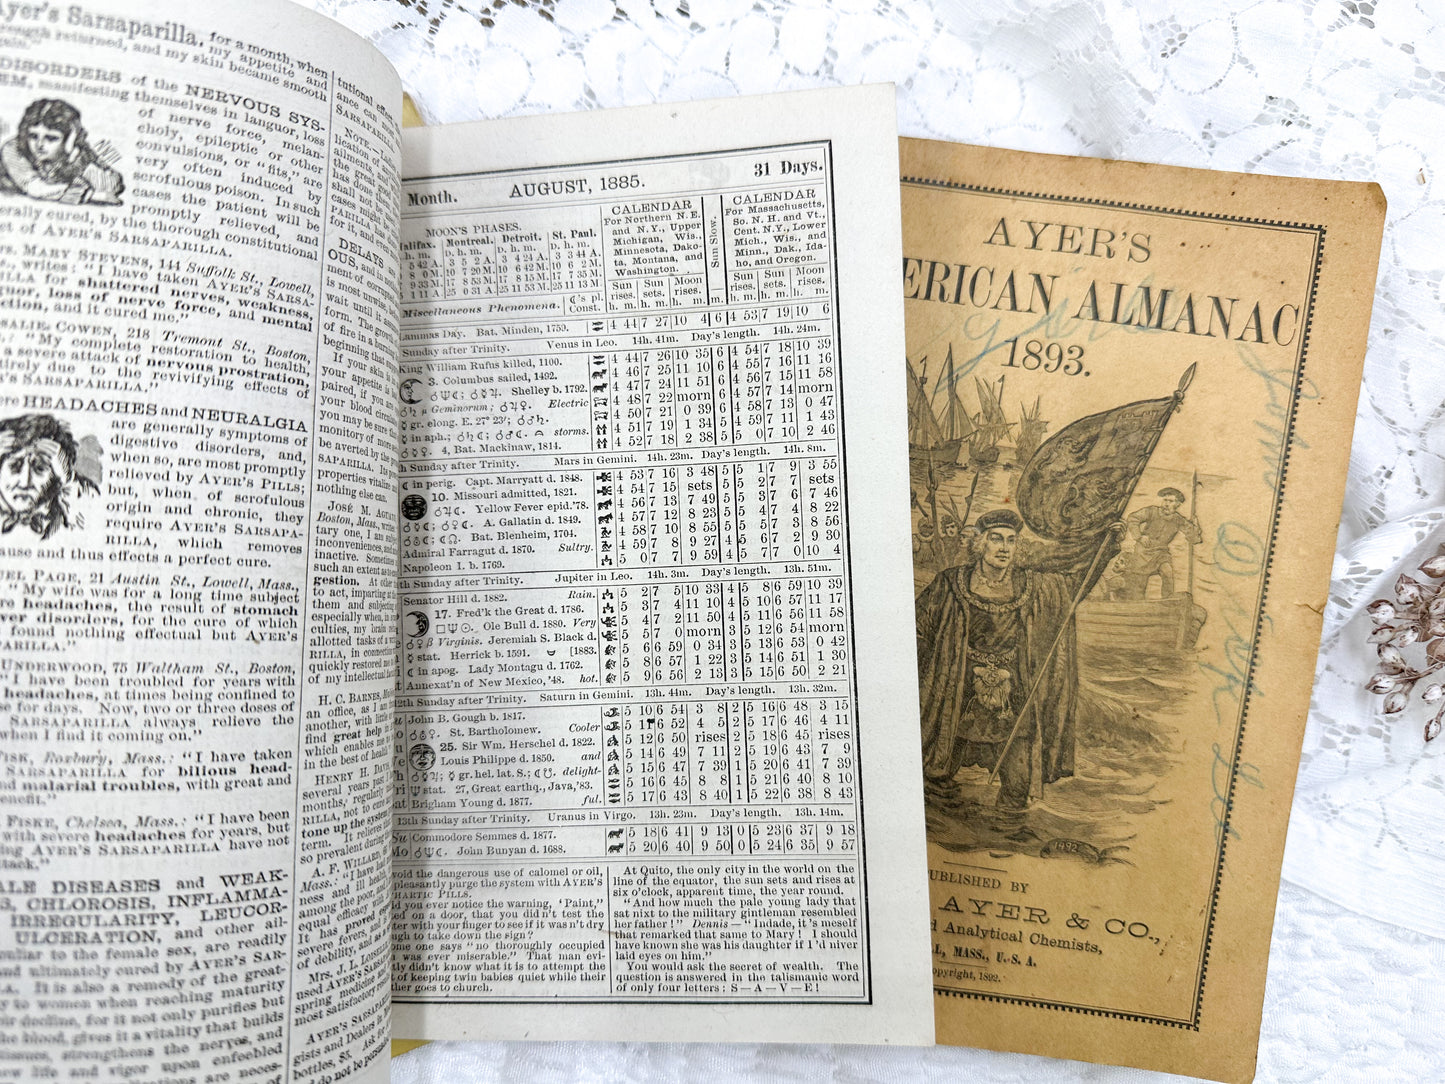 Vintage Almanac Set